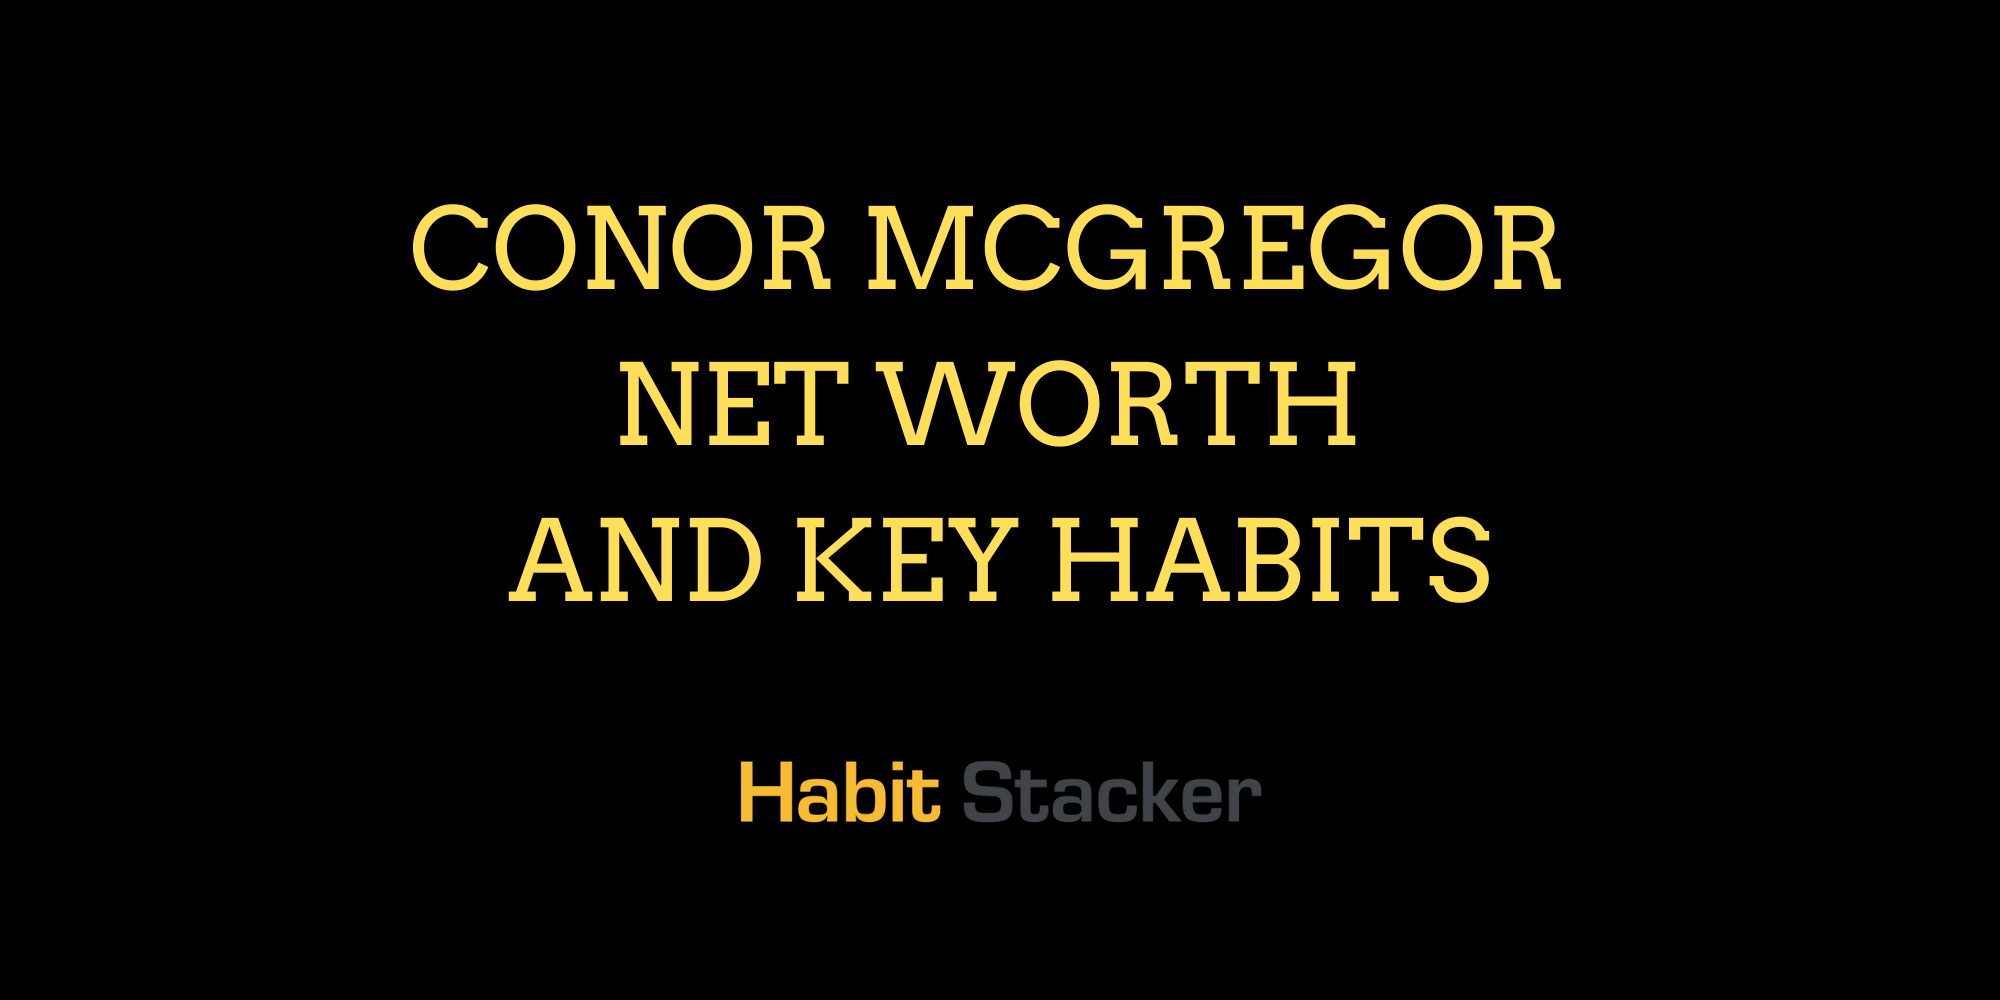 Conor Mcgregor Net Worth and Key Habits